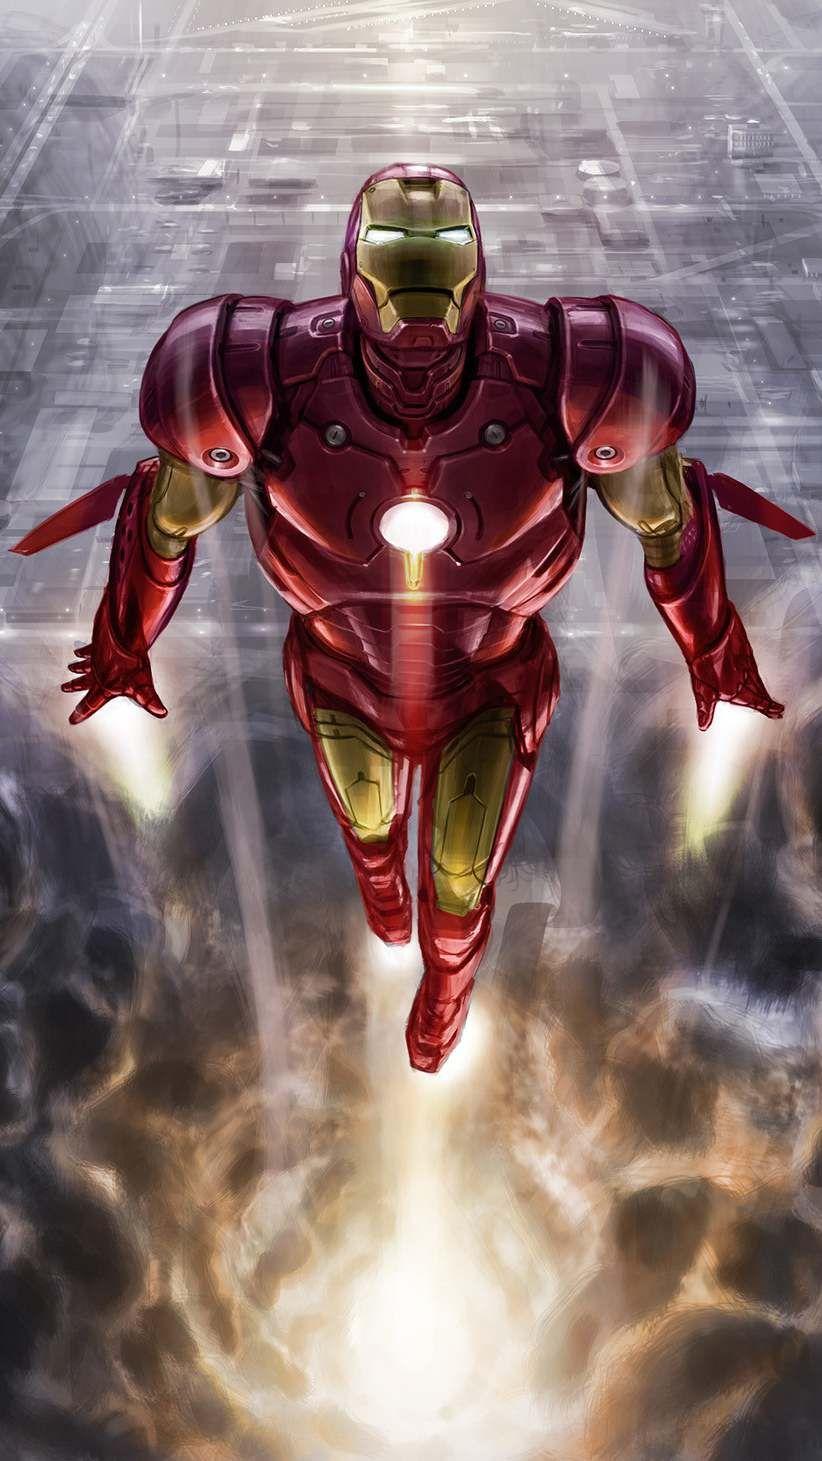 Iron Man Vertical Fly iPhone Wallpaper. Iron man armor